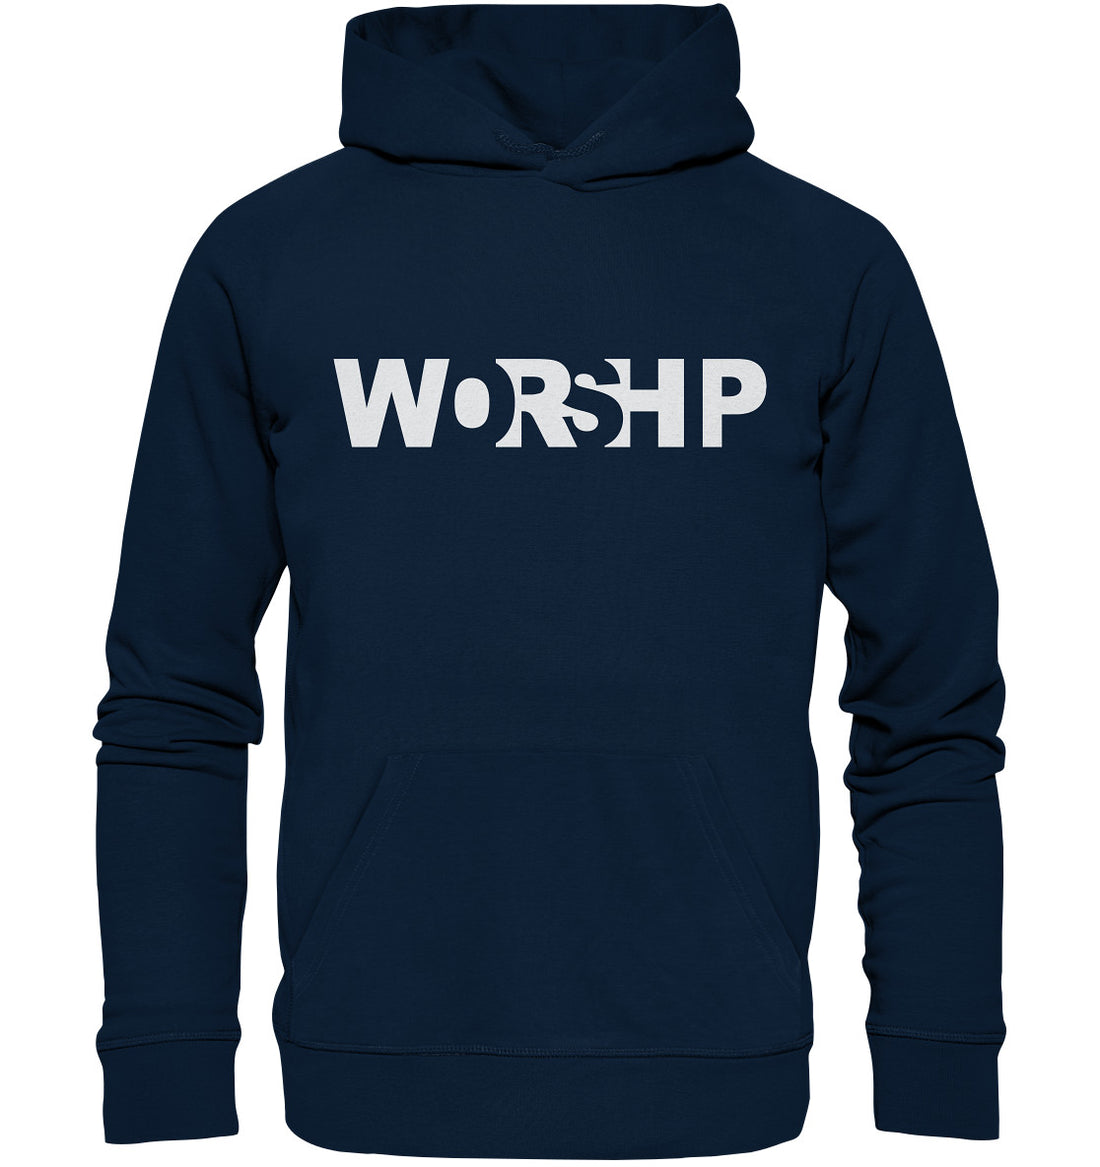 WORSHIP - Organic Hoodie